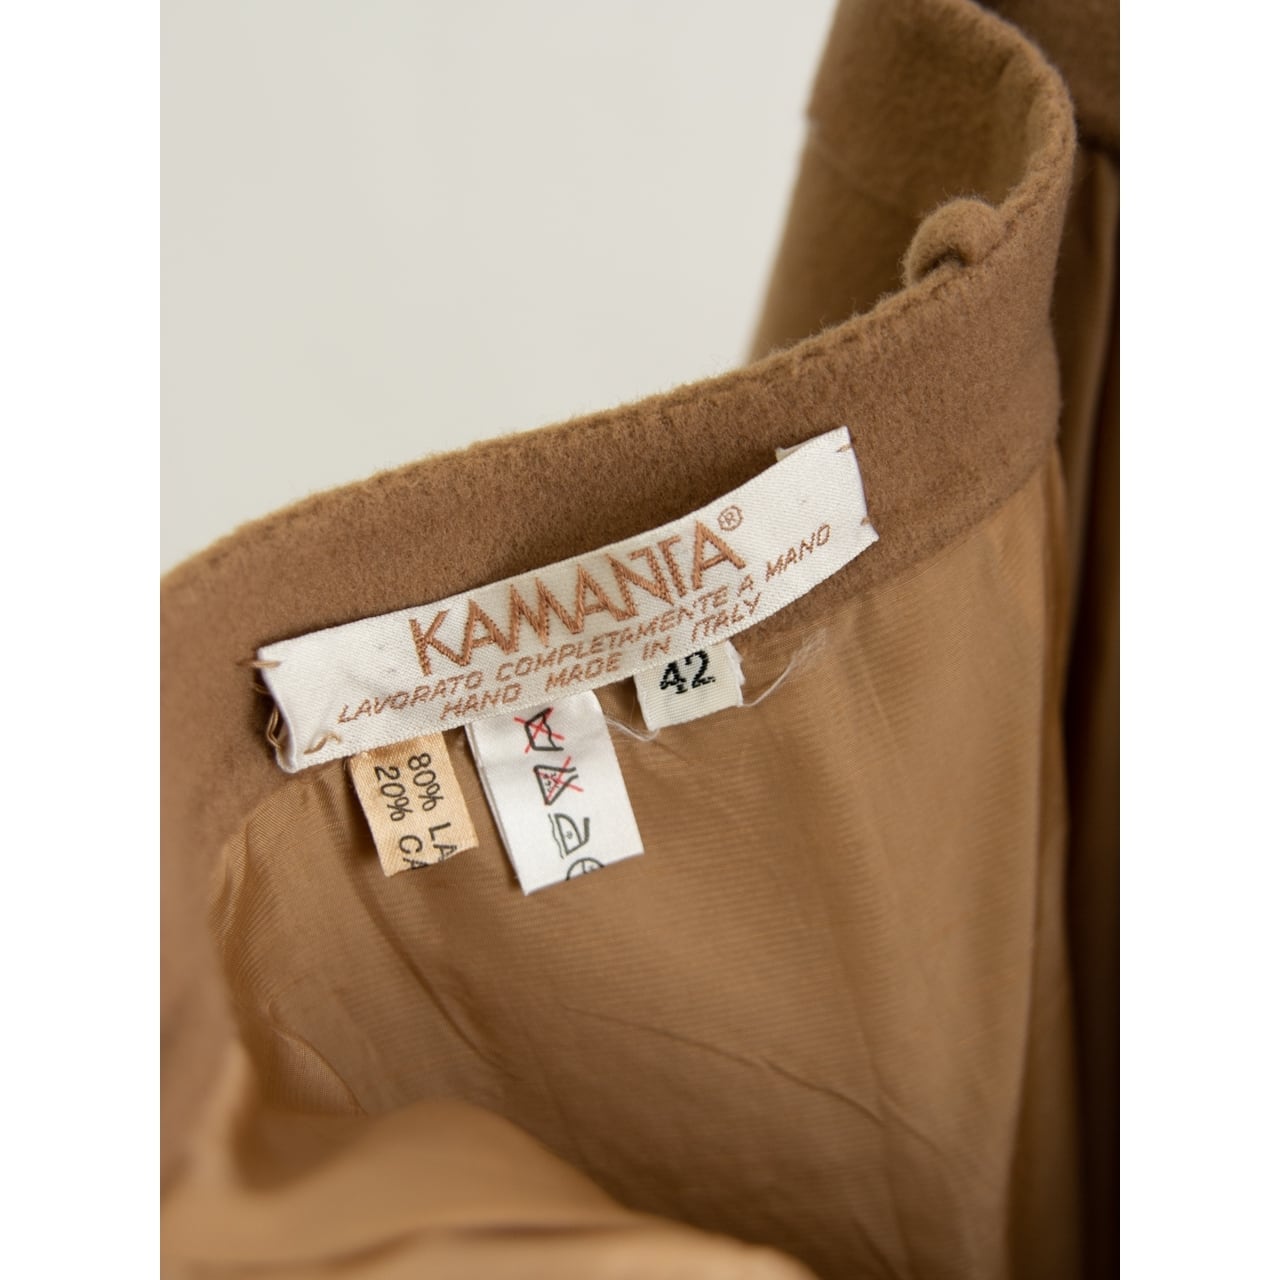 【KAMANTA】Hand Made in Italy 70's Wool-Cashmere Doubleface Skirt（カマンタ イタリア製ウールカシミヤ ダブルフェイススカート）